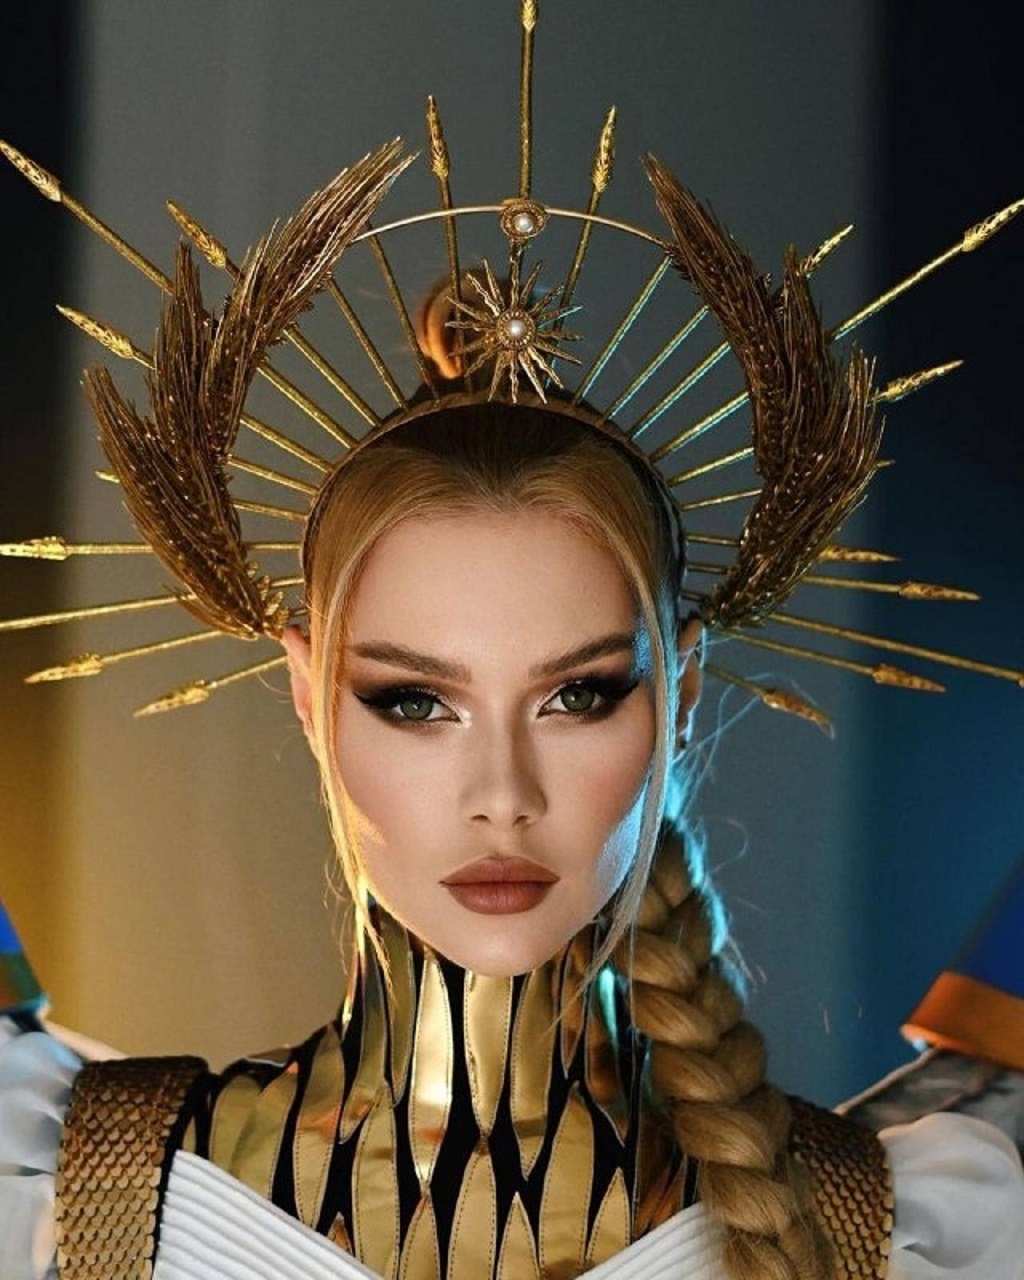 Miss Ukrajina bude reprezentovať krajinu v šatách Bojovník svetla